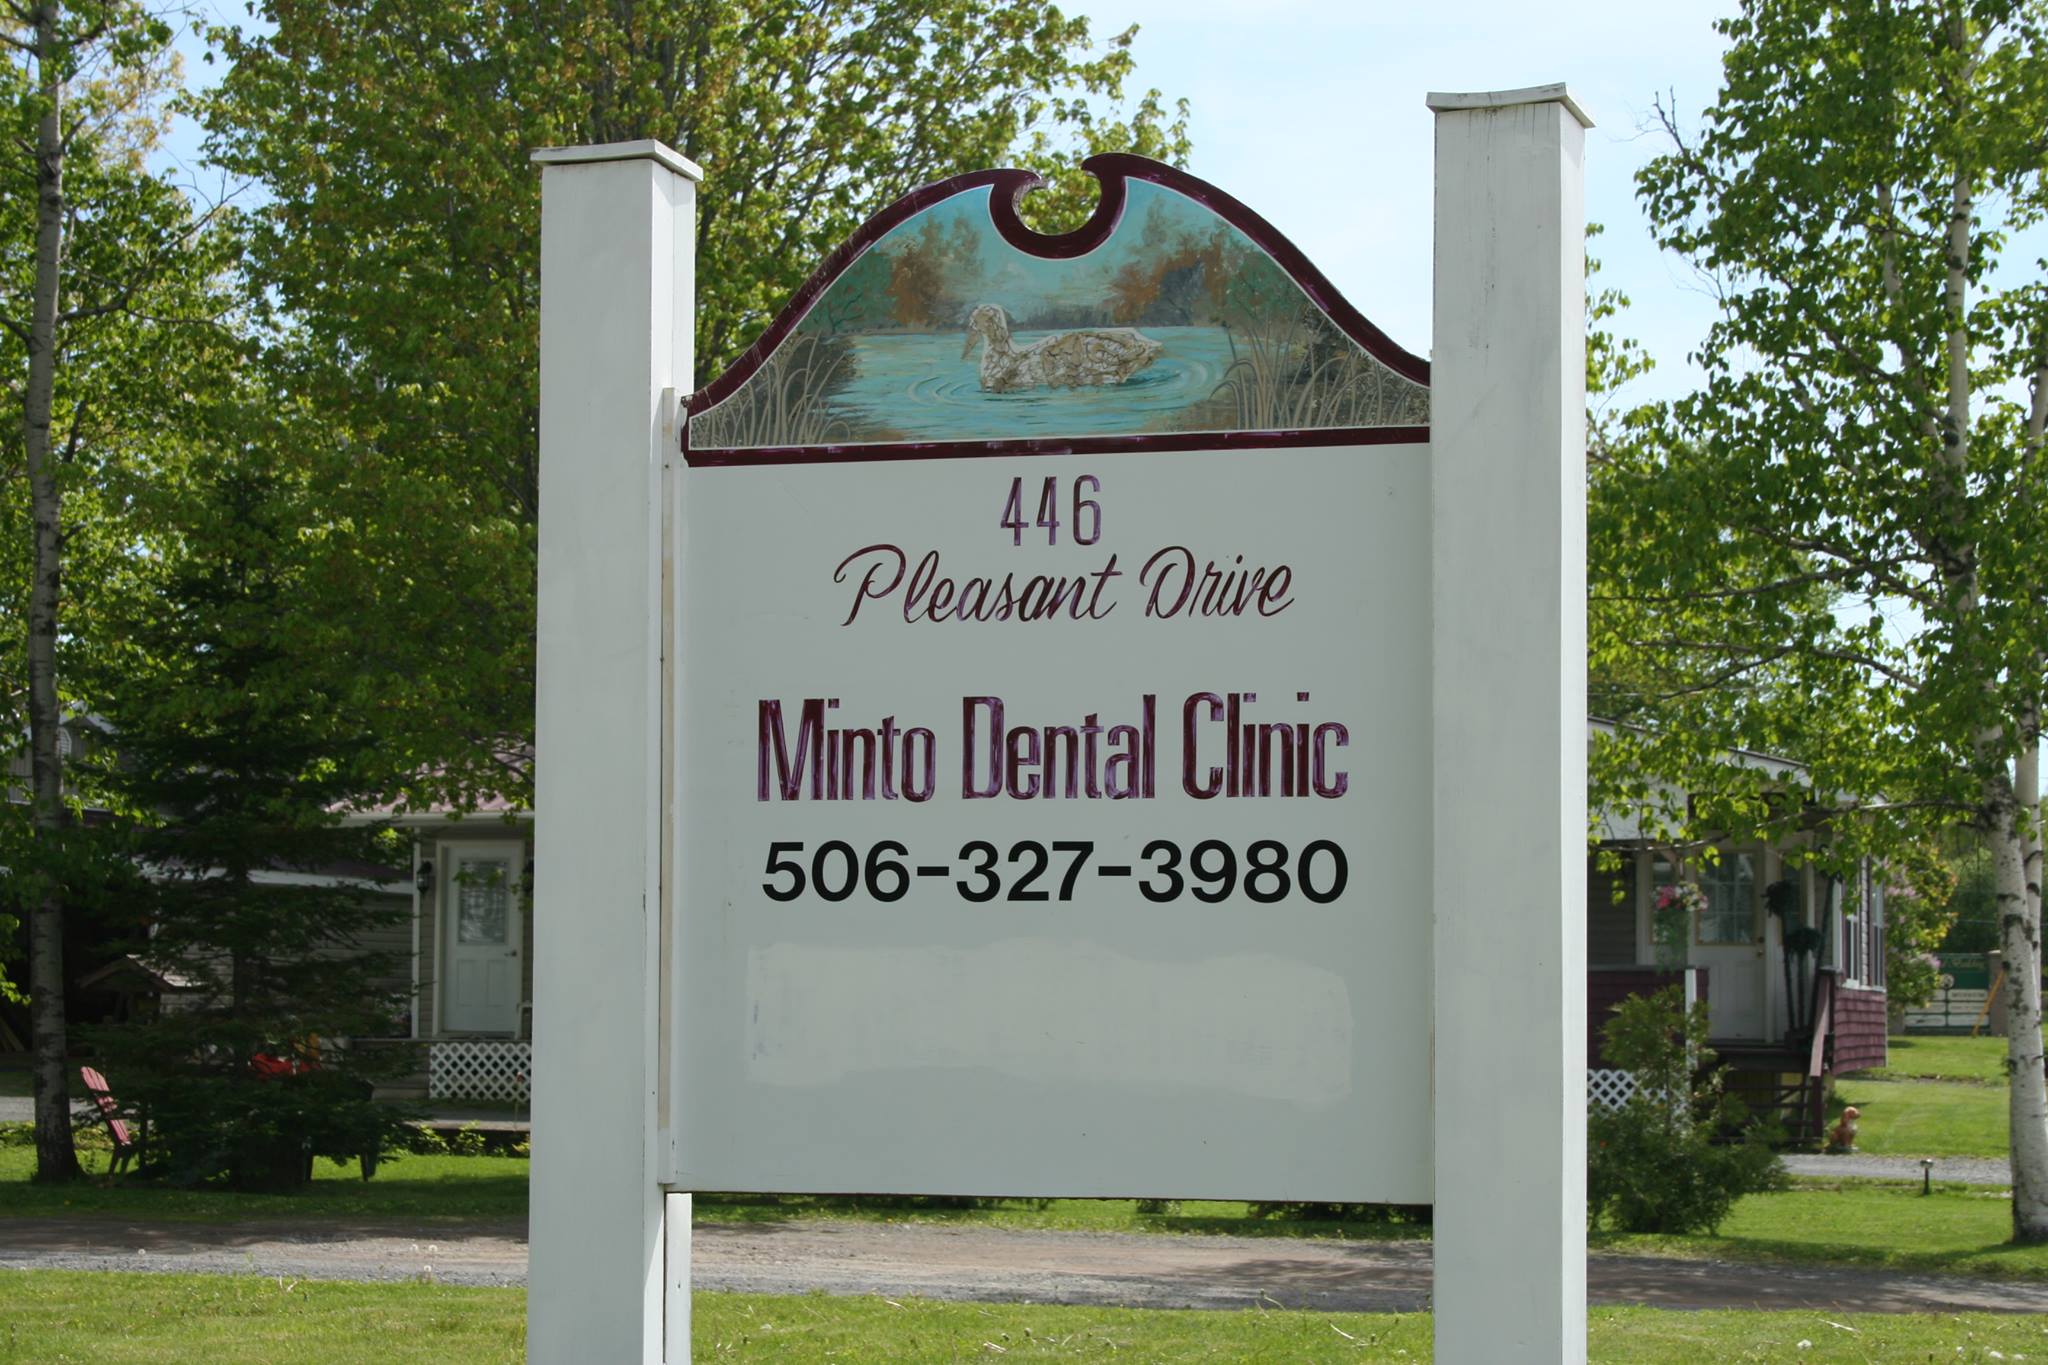 Minto Dental Clinic 446 Pleasant Drive, Minto New Brunswick E4B 2T1